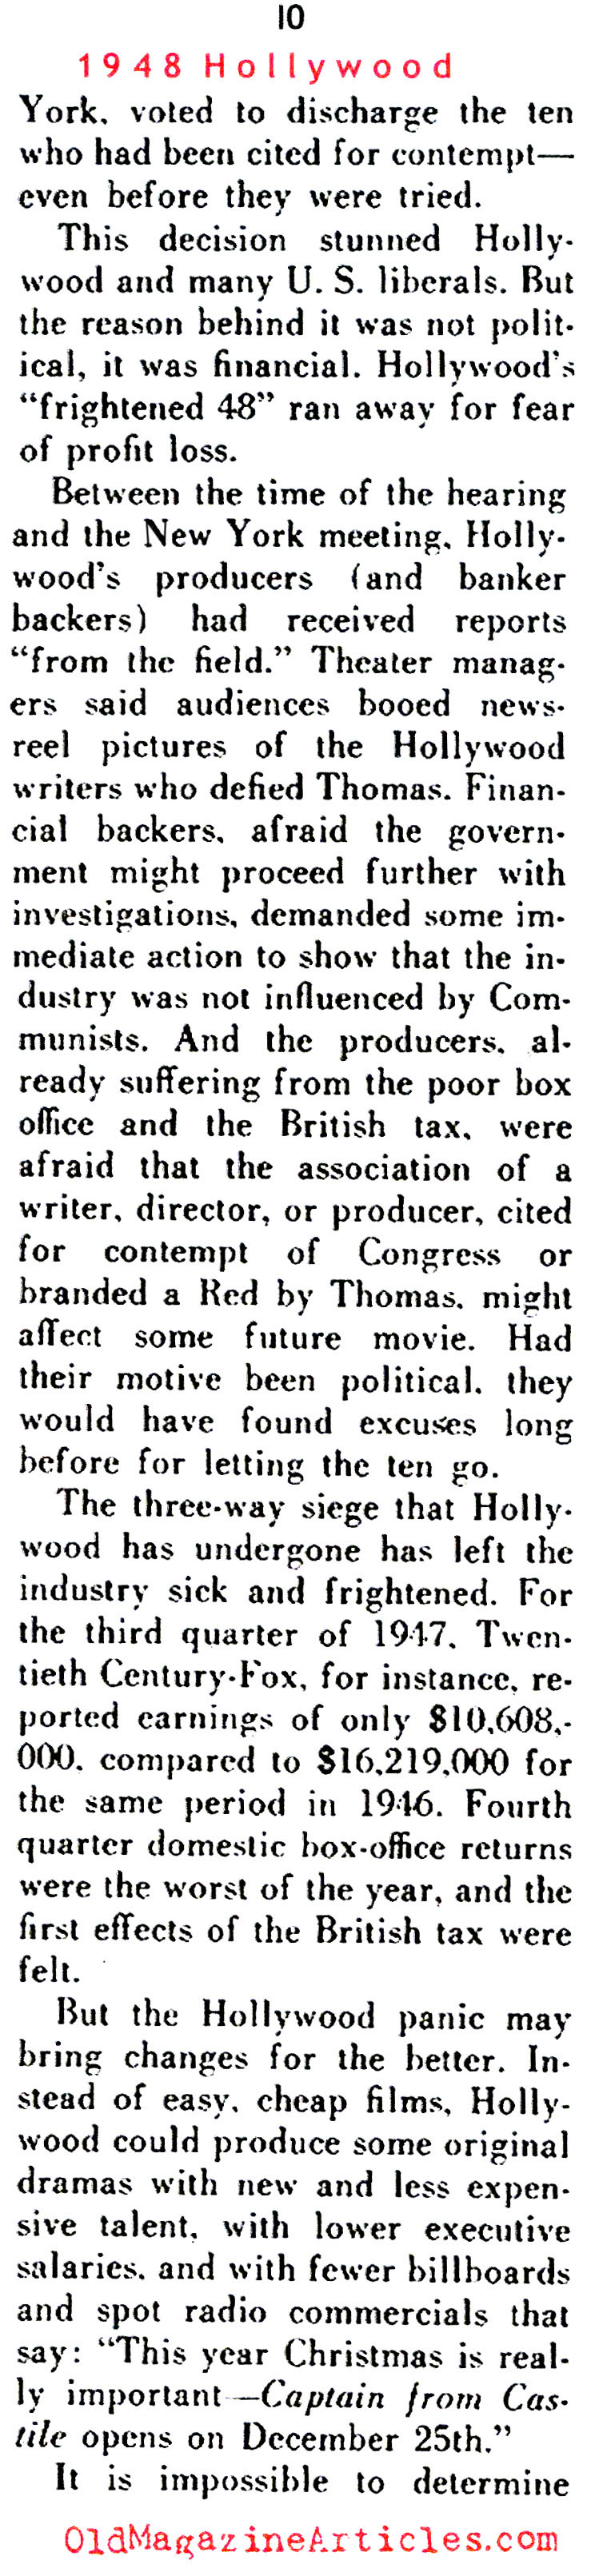 ''Panic in Hollywood'' ('48 Magazine, 1948)